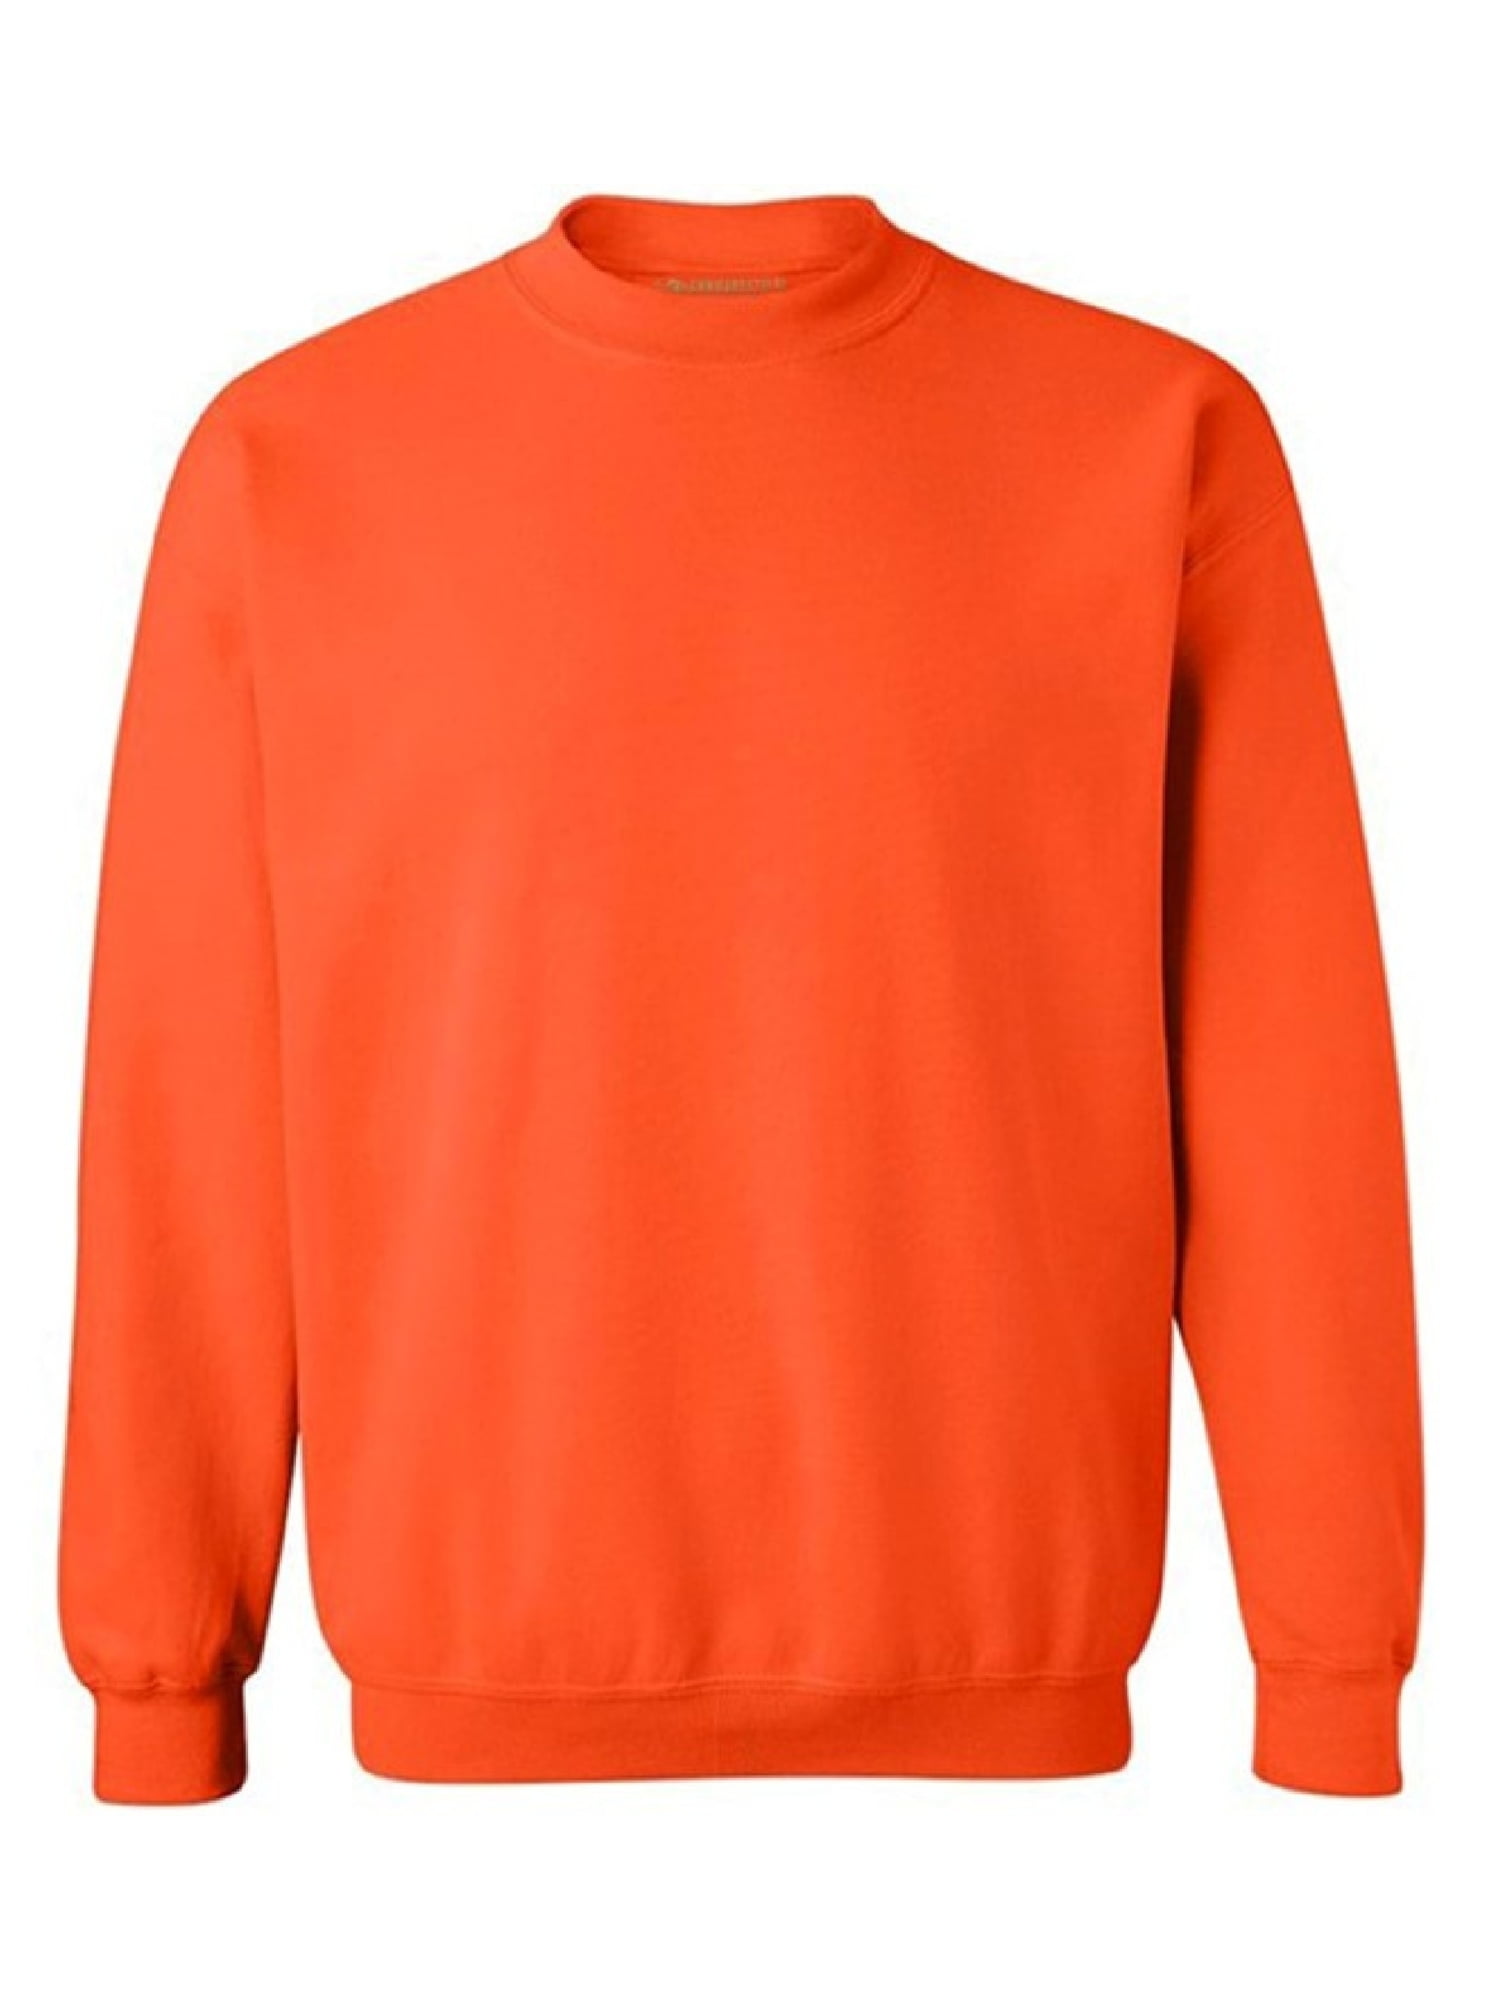 Orange Sweatshirt Orange Sweater Orange Hoodie for Thanksgiving